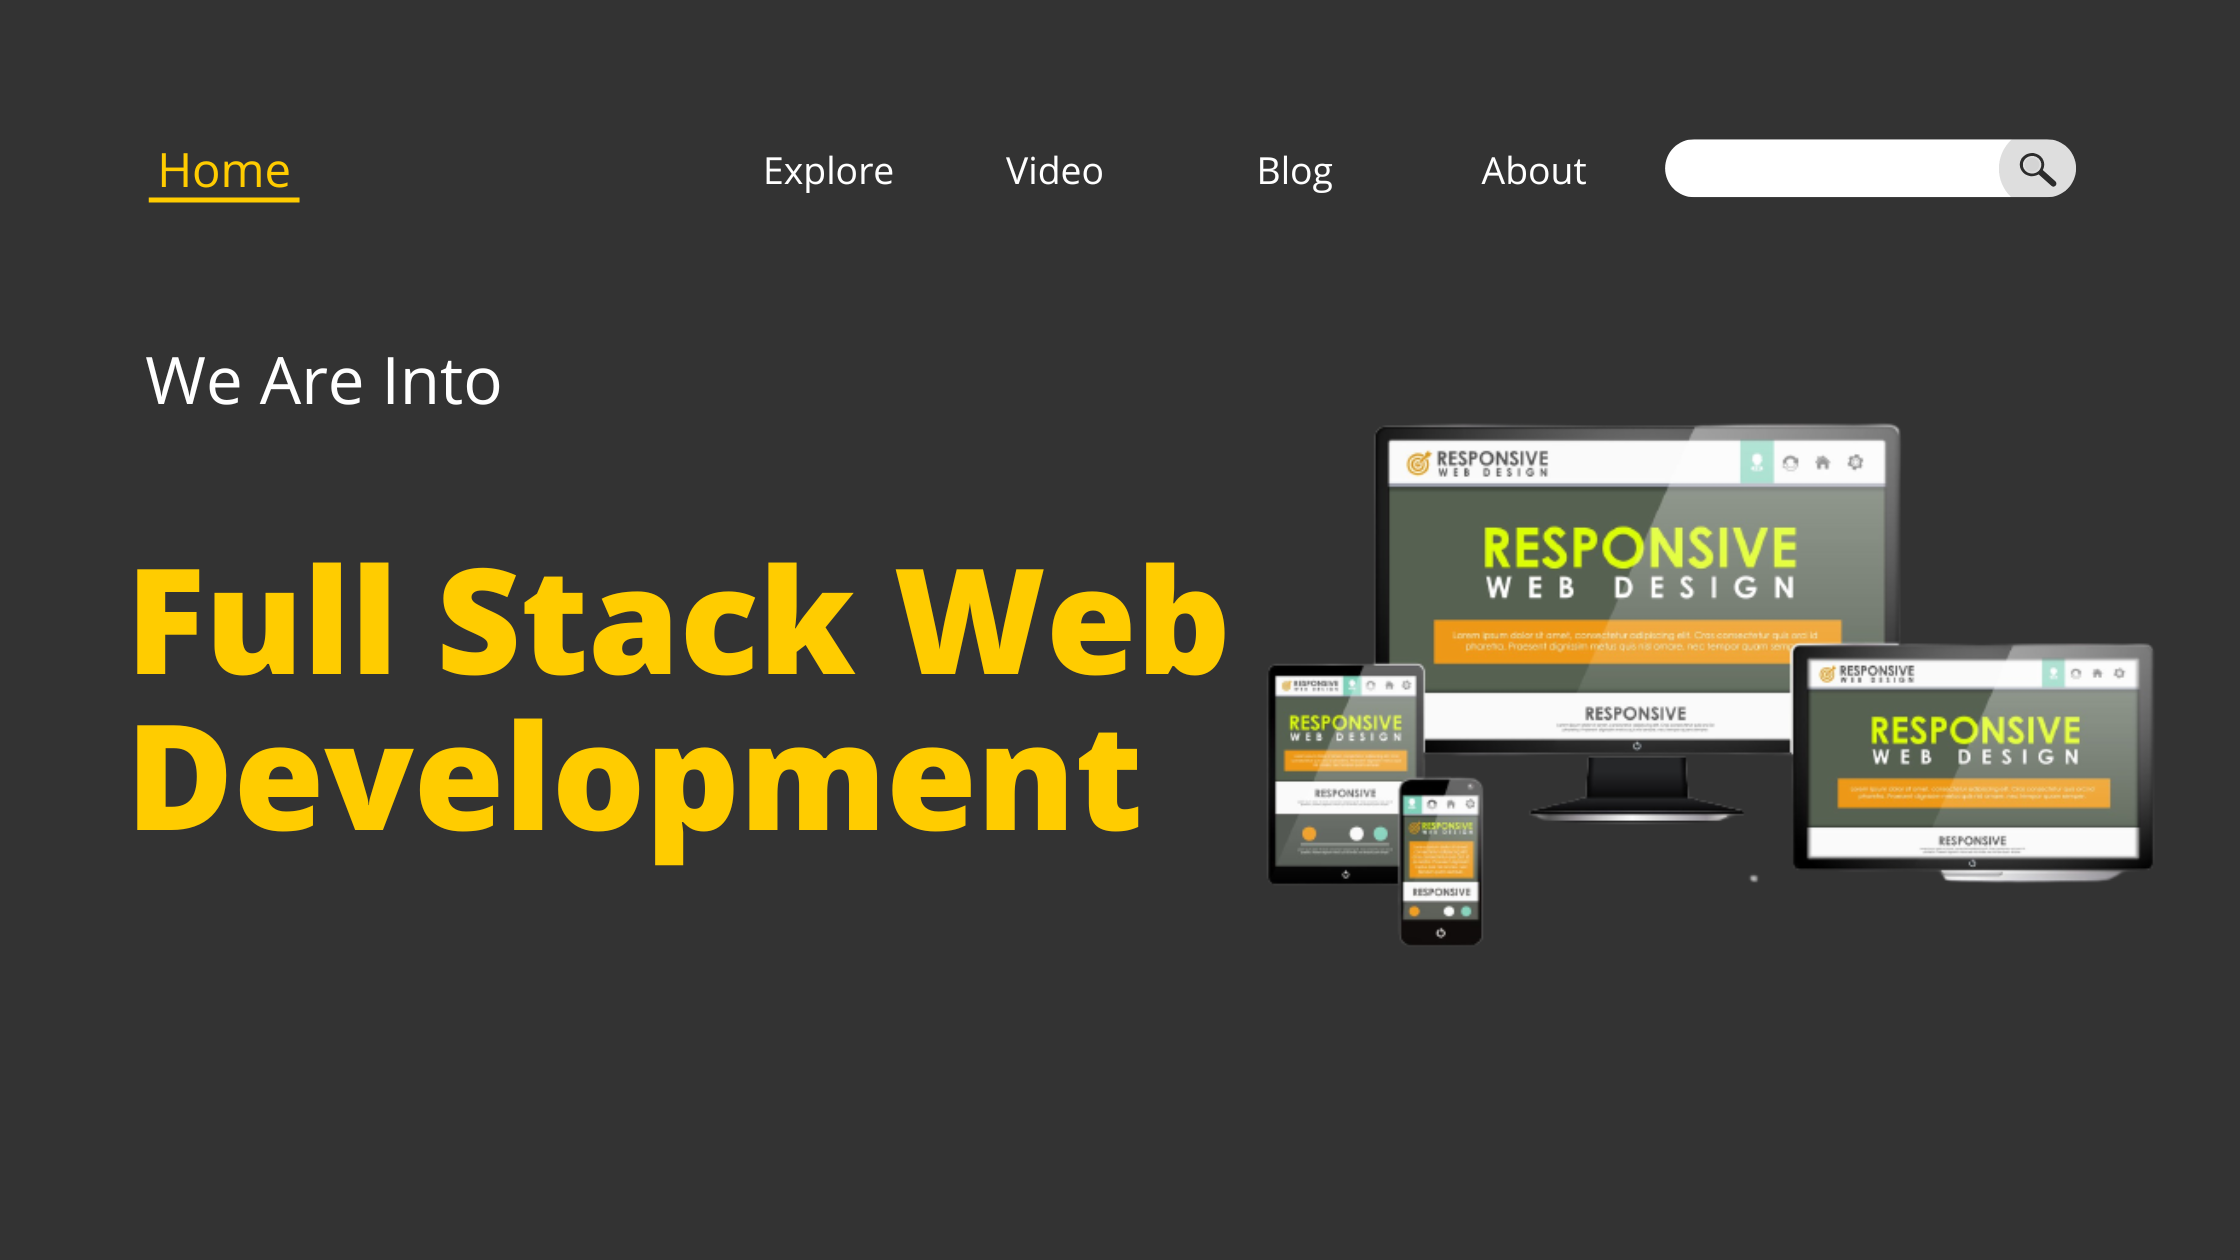 Full Stack Web Development: a top tech skill in demand